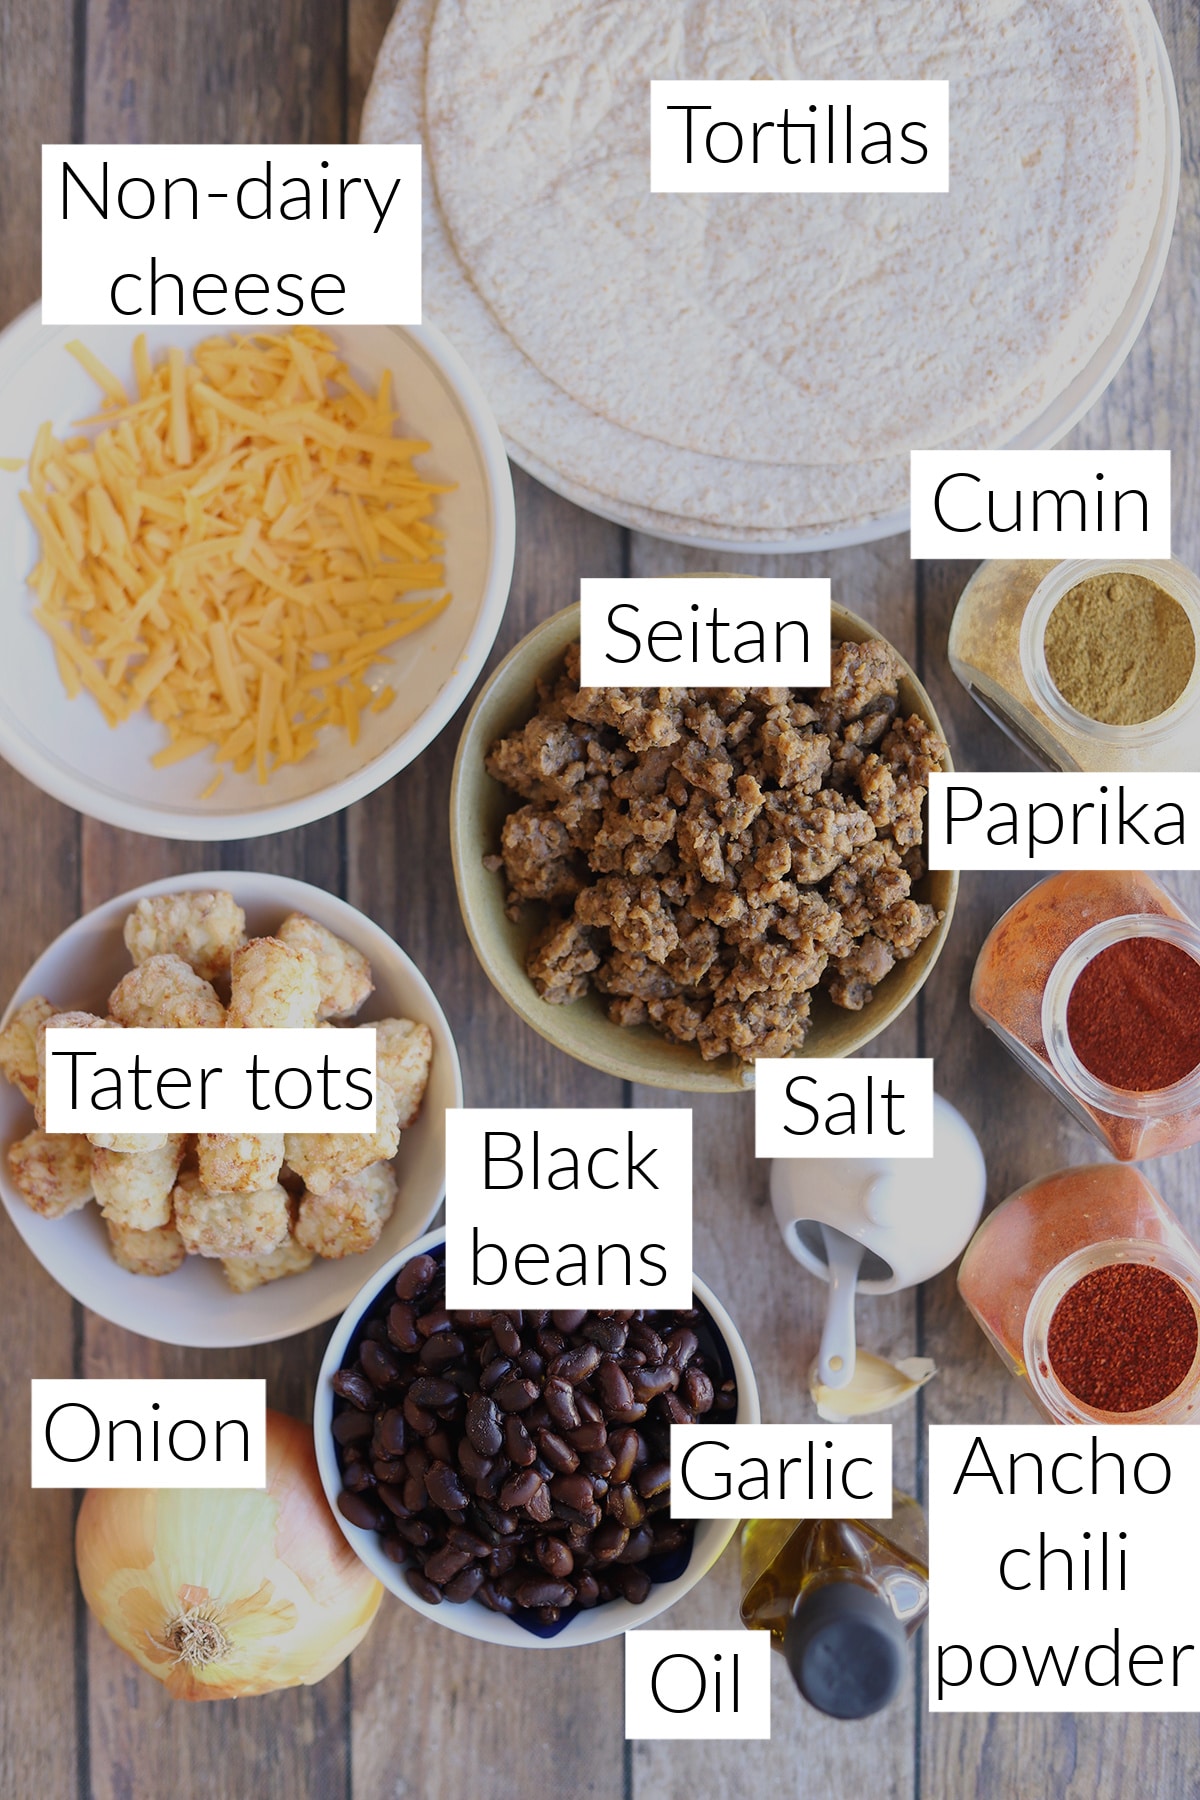 Labeled ingredients for vegan burritos.